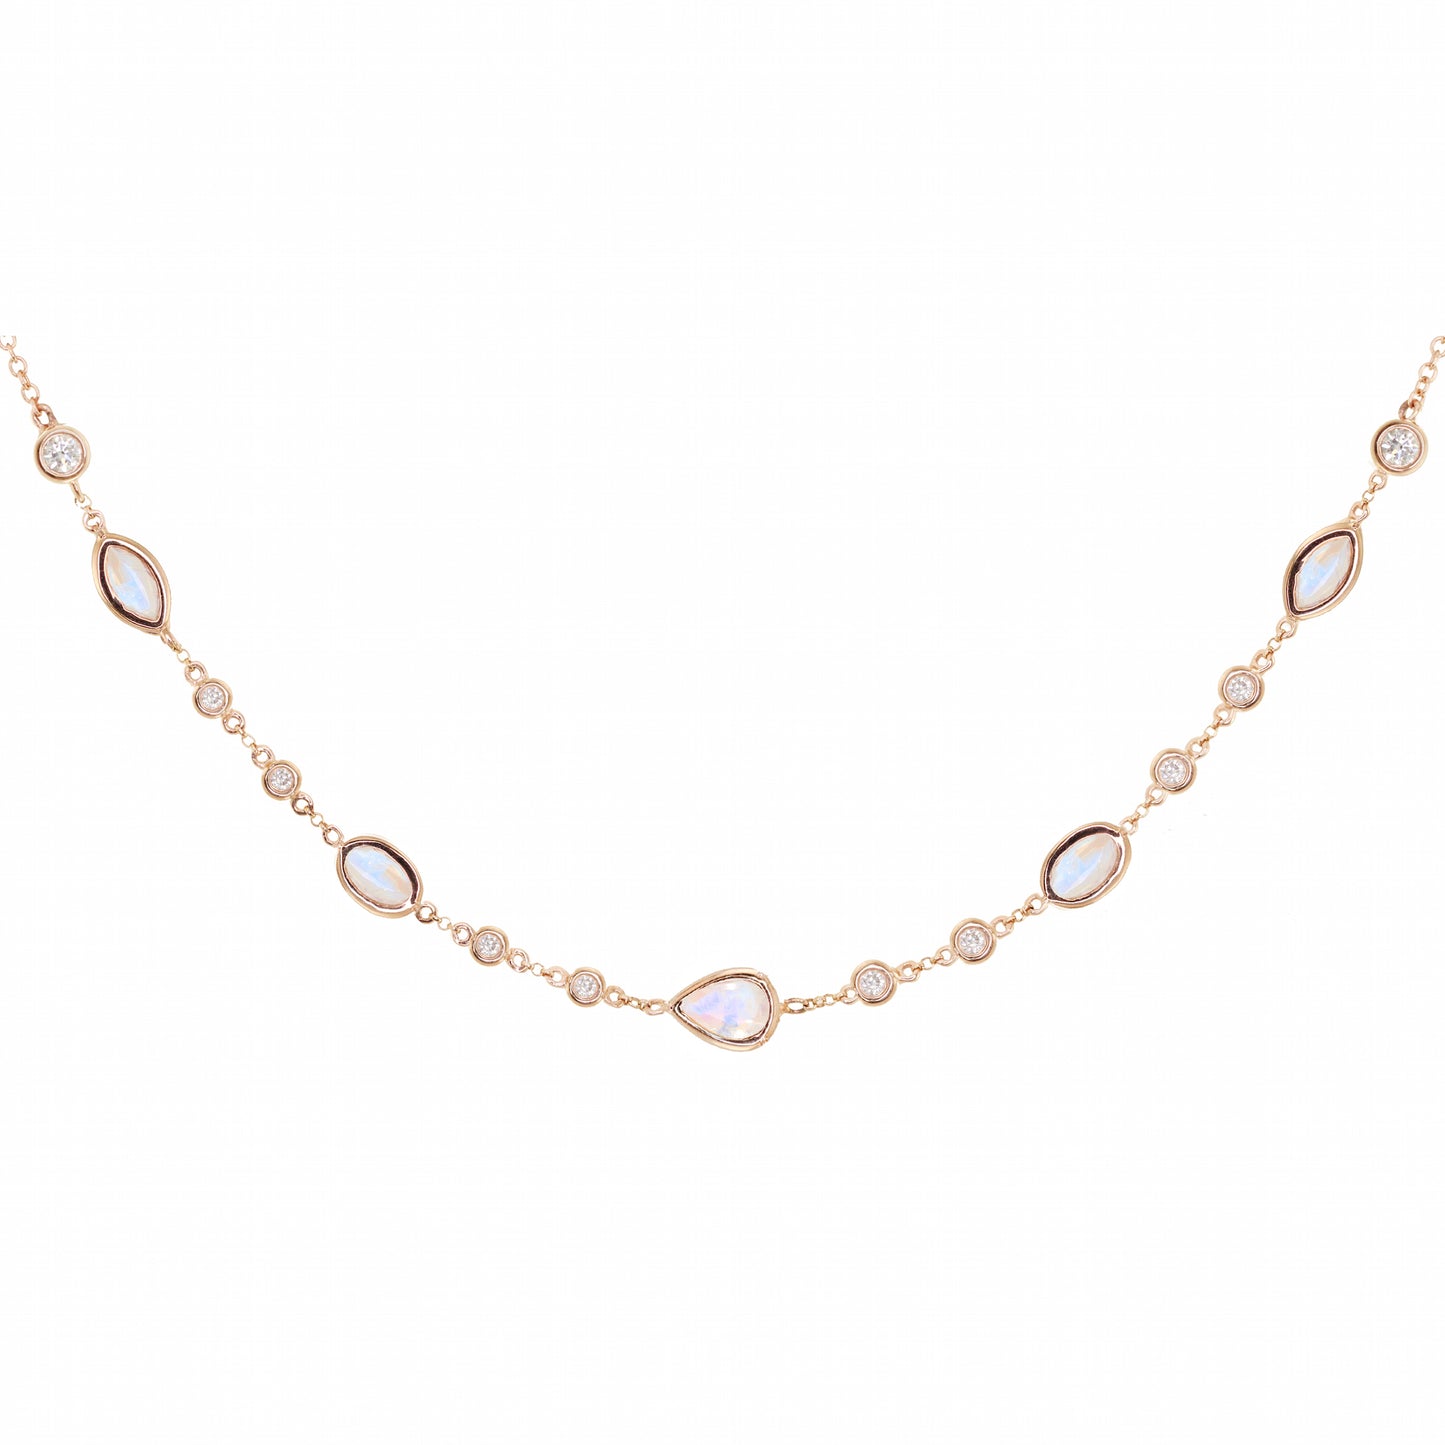 14k gold diamond bezel necklaces